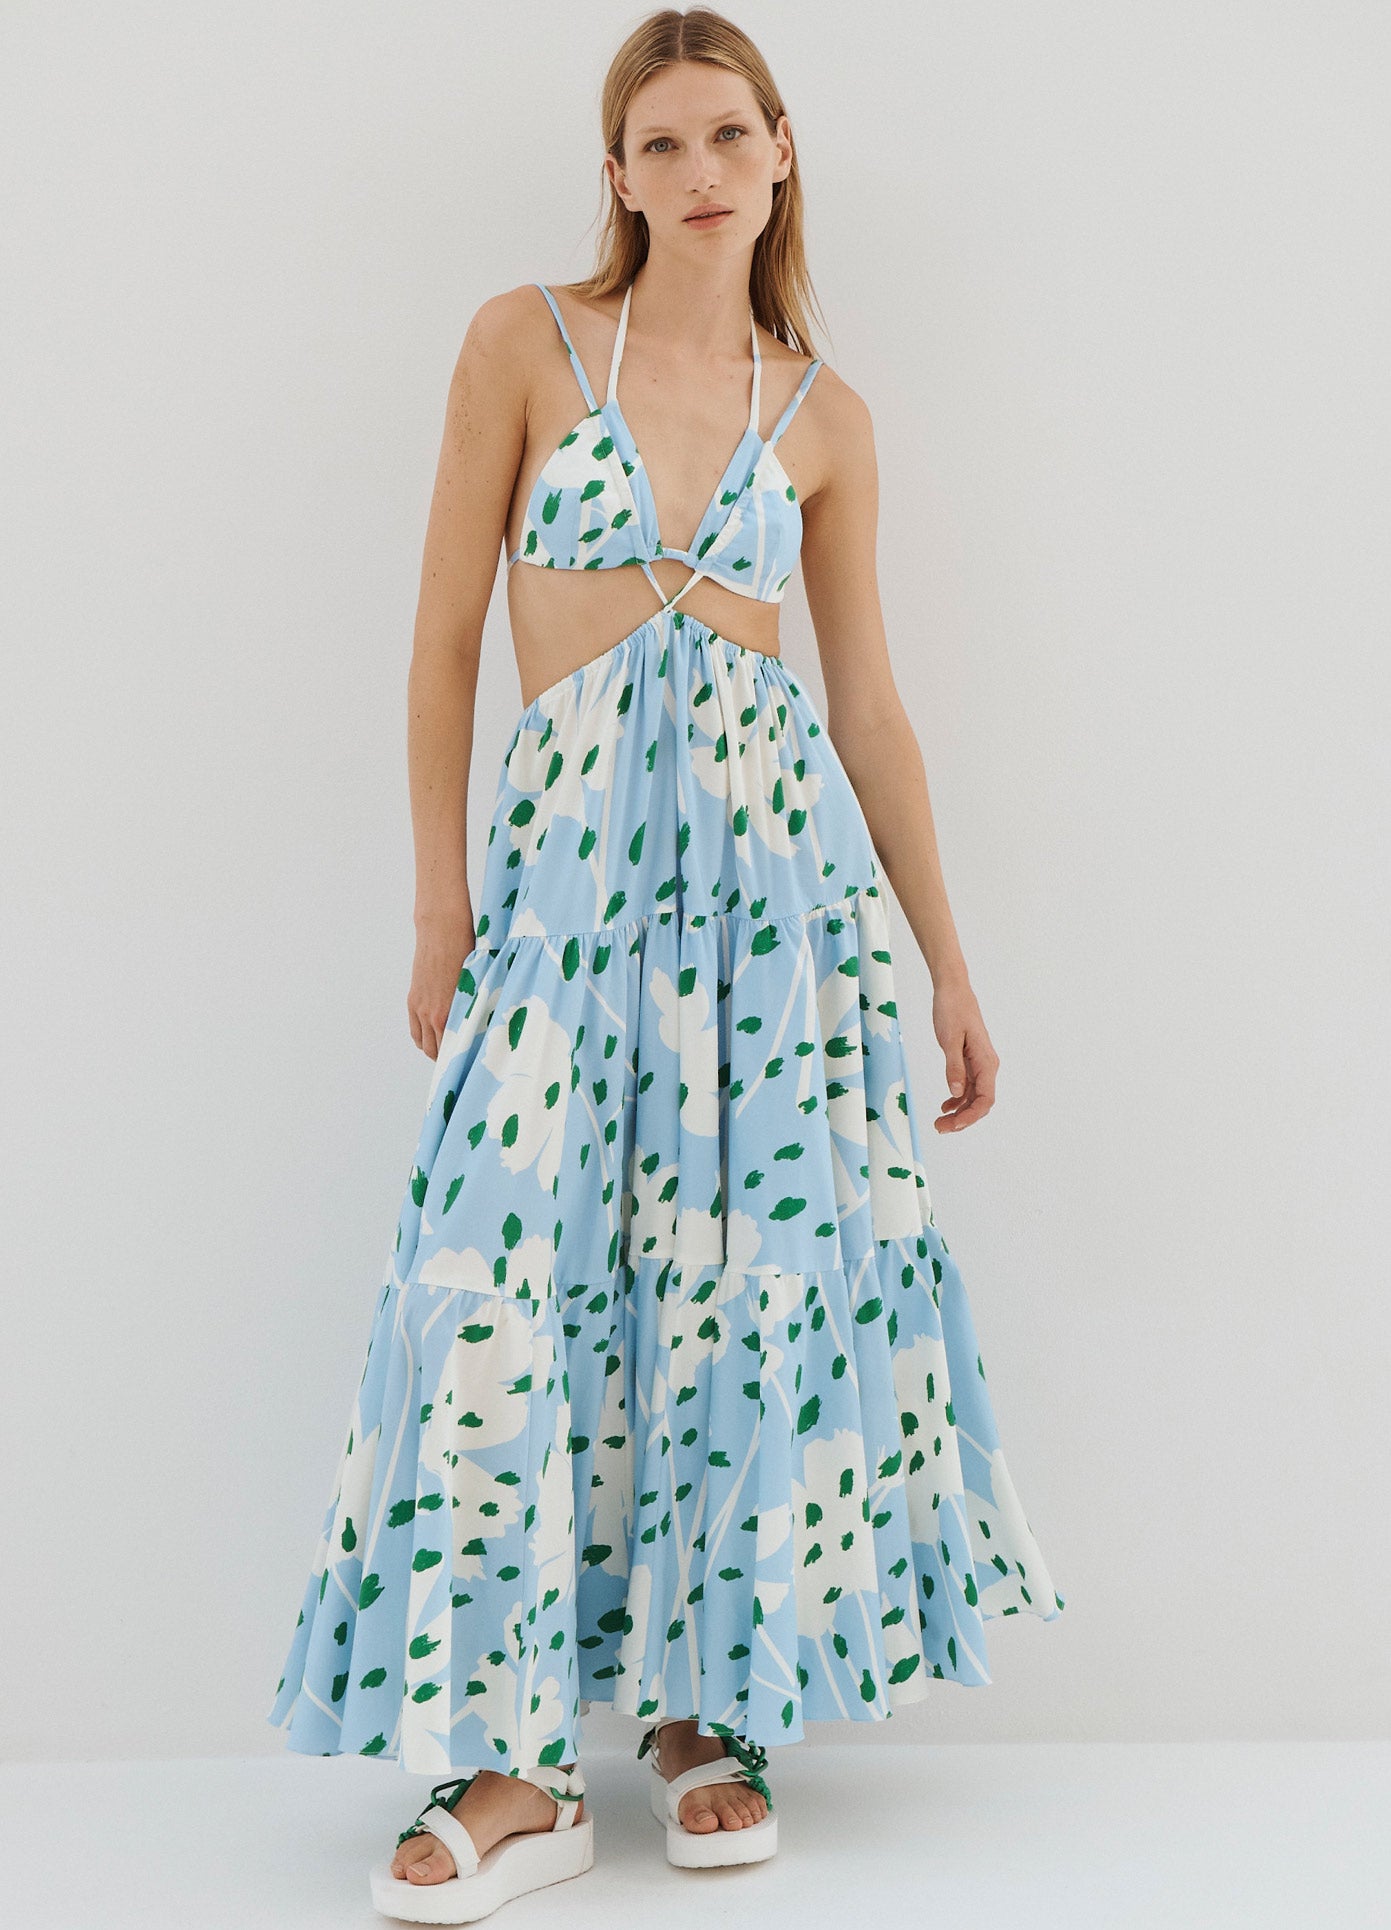 MONSE Floral Print Bra Detail Maxi Dress in Light Blue Multi on Model Full Front View